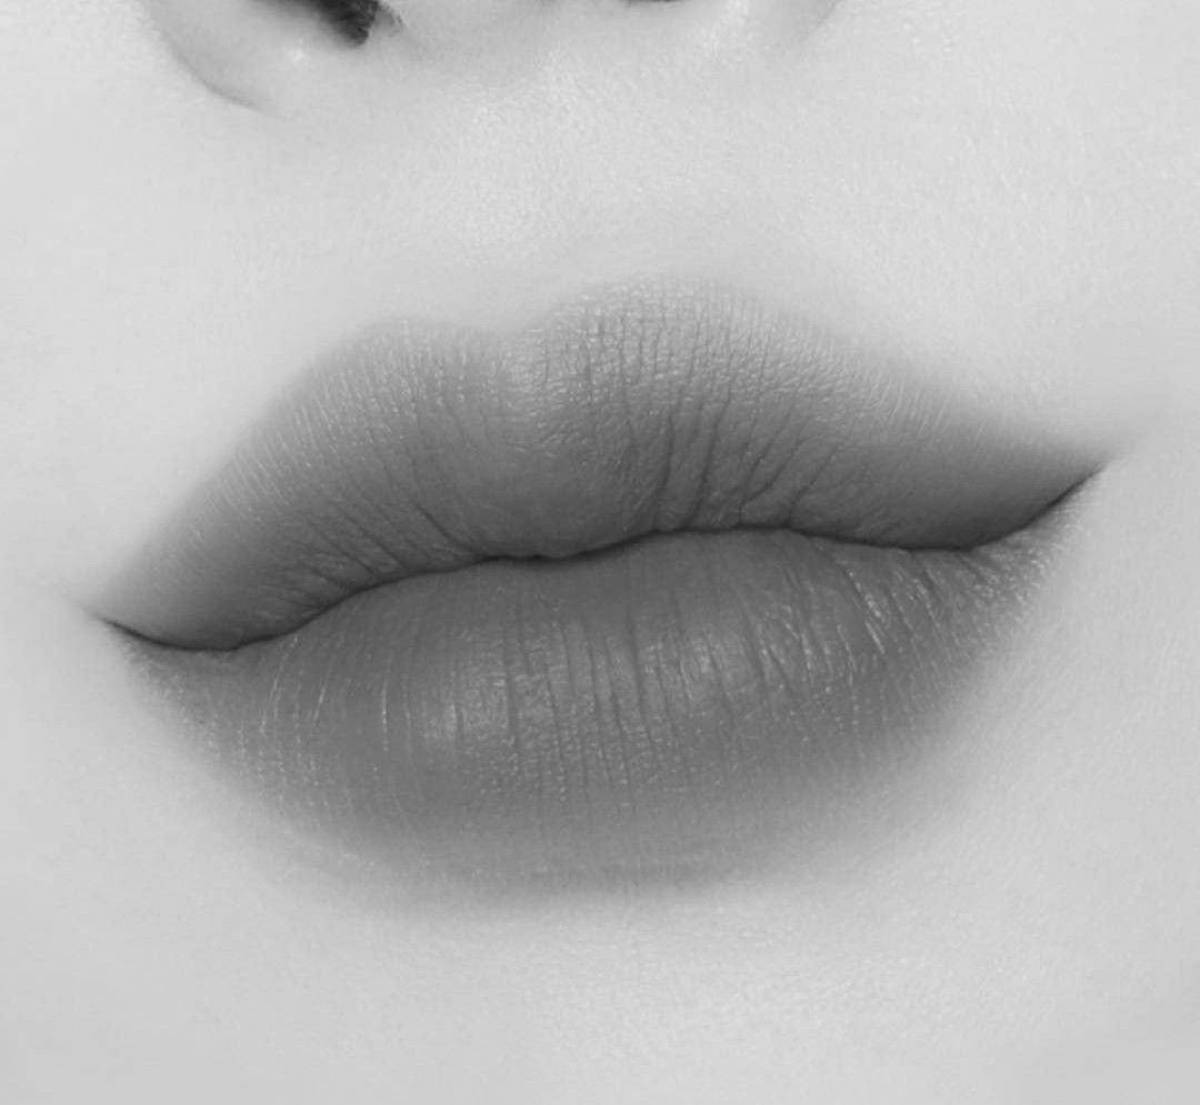 Lips without lipstick plump beautiful photo for #4